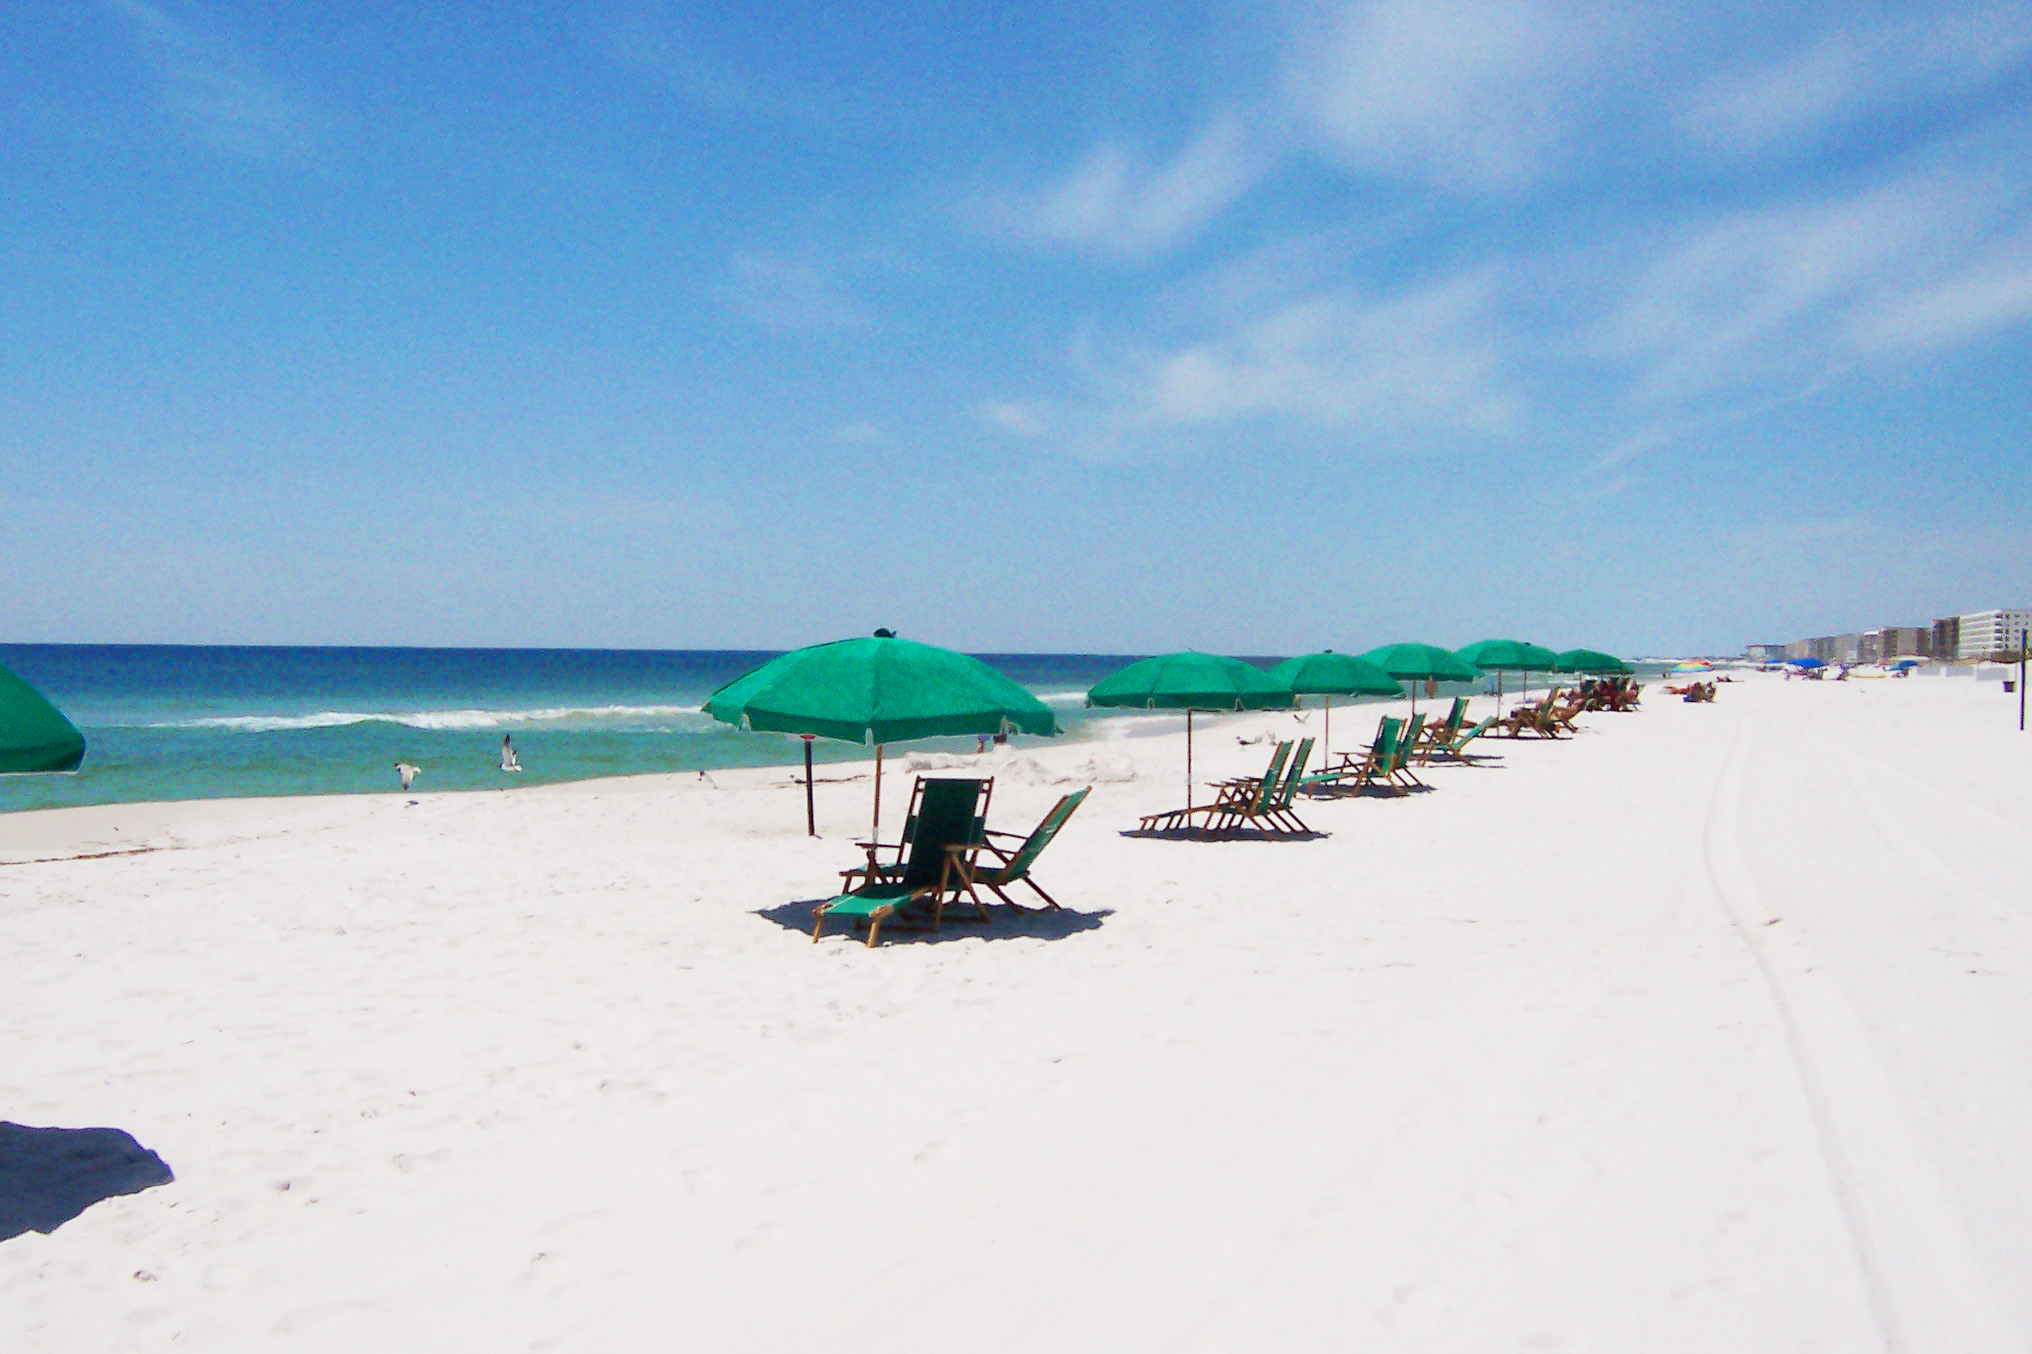 Gulf Dunes Resort Okaloosa Island Fort Walton Beach Destin Florida Vacation Rentals by Sunset Resort Rentals